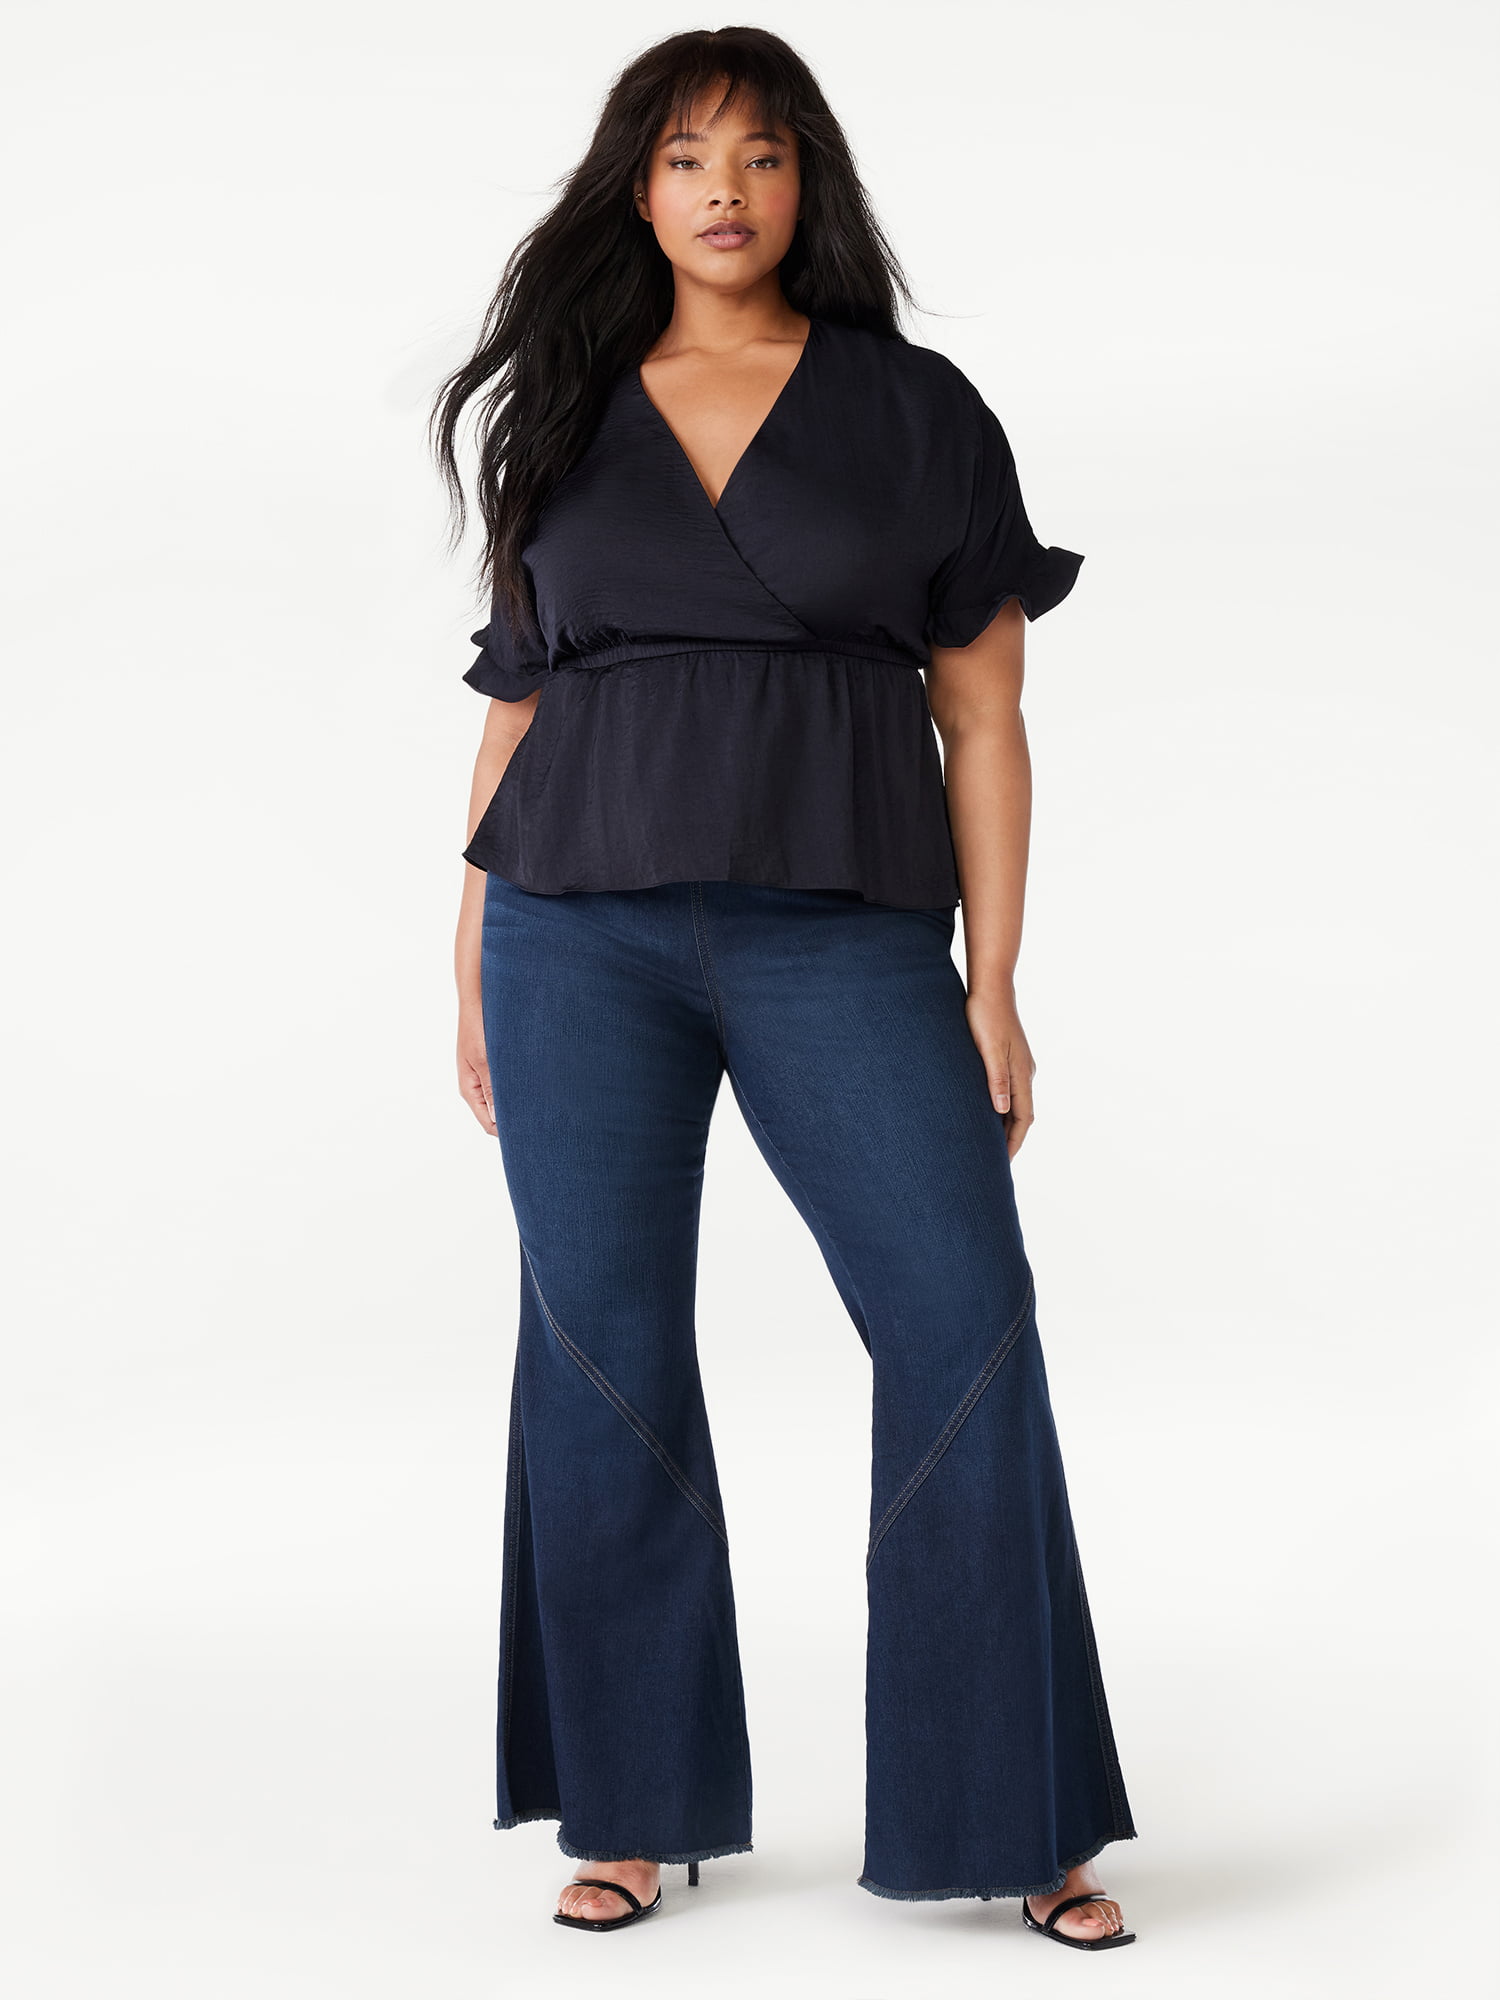 Sofia Jeans Women's Plus Size Faux Wrap Blouse with Short Sleeves, Sizes 1X- 5X 